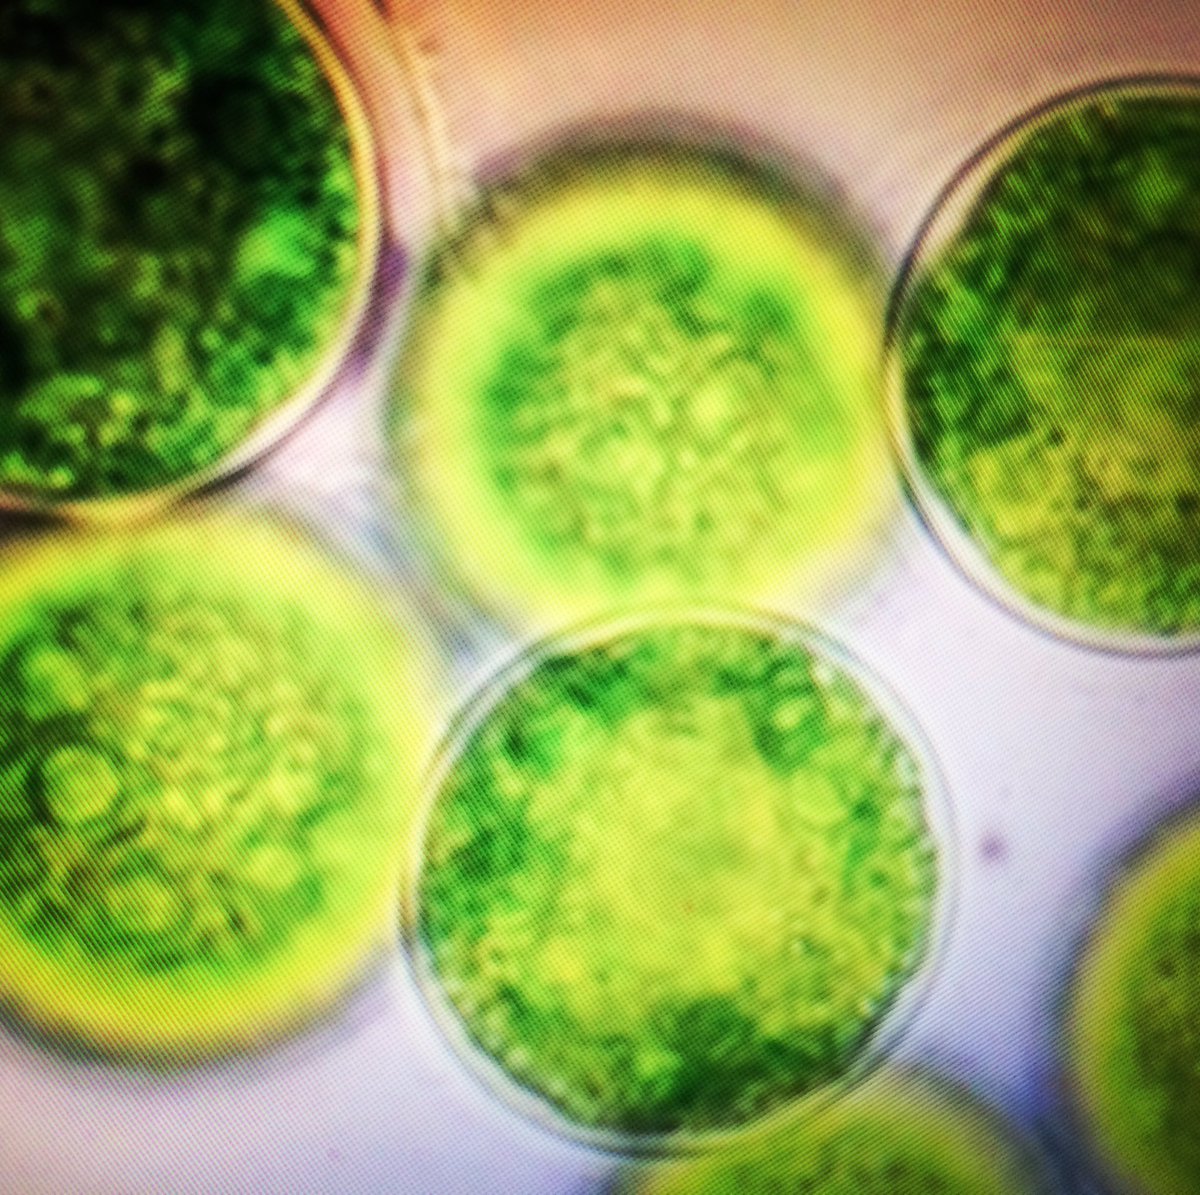 Nannochloropsis spp. -- oleaginious microalgae, knocking out nitrate reductase gene -- #crispr #crisprology #algae #microalgae #microalgaeoil #biofuelproduction #biofuel #oleaginous #feedstock #genomeediting -- goo.gl/Q73N1c